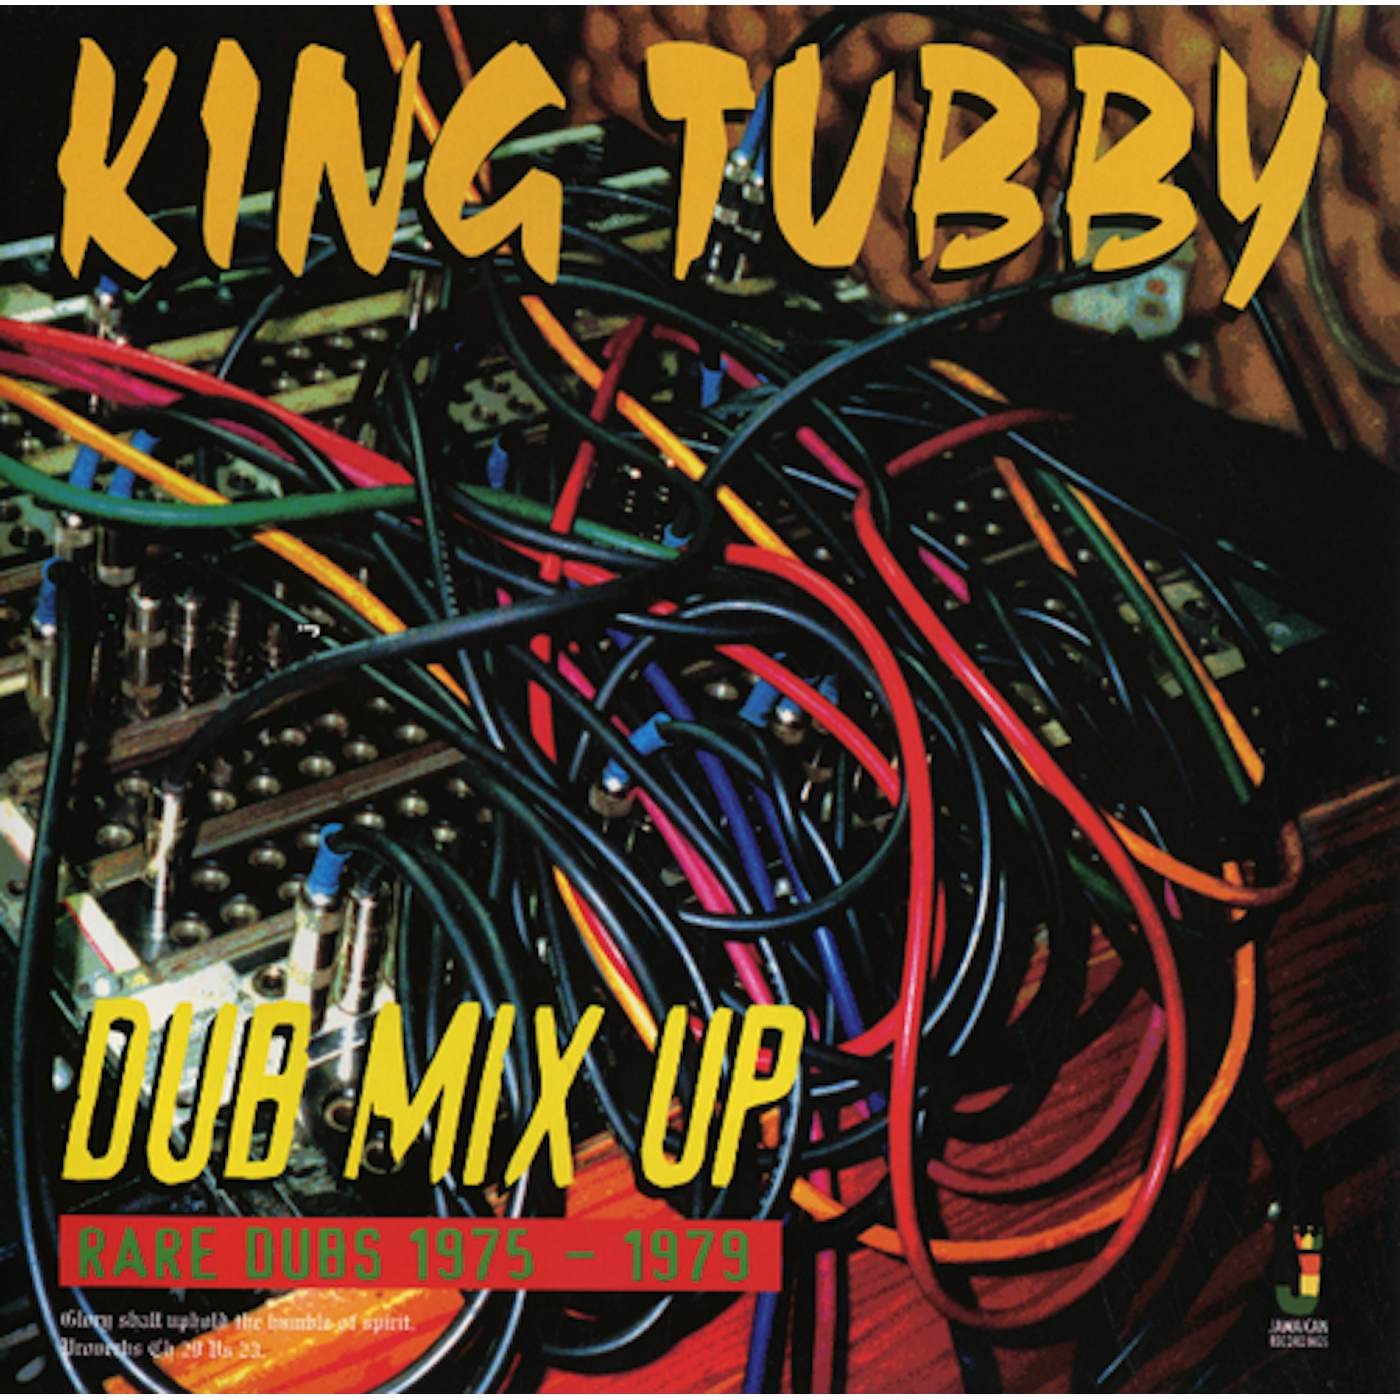 King Tubby DUB MIX UP-RARE DUBS 1975-79 CD